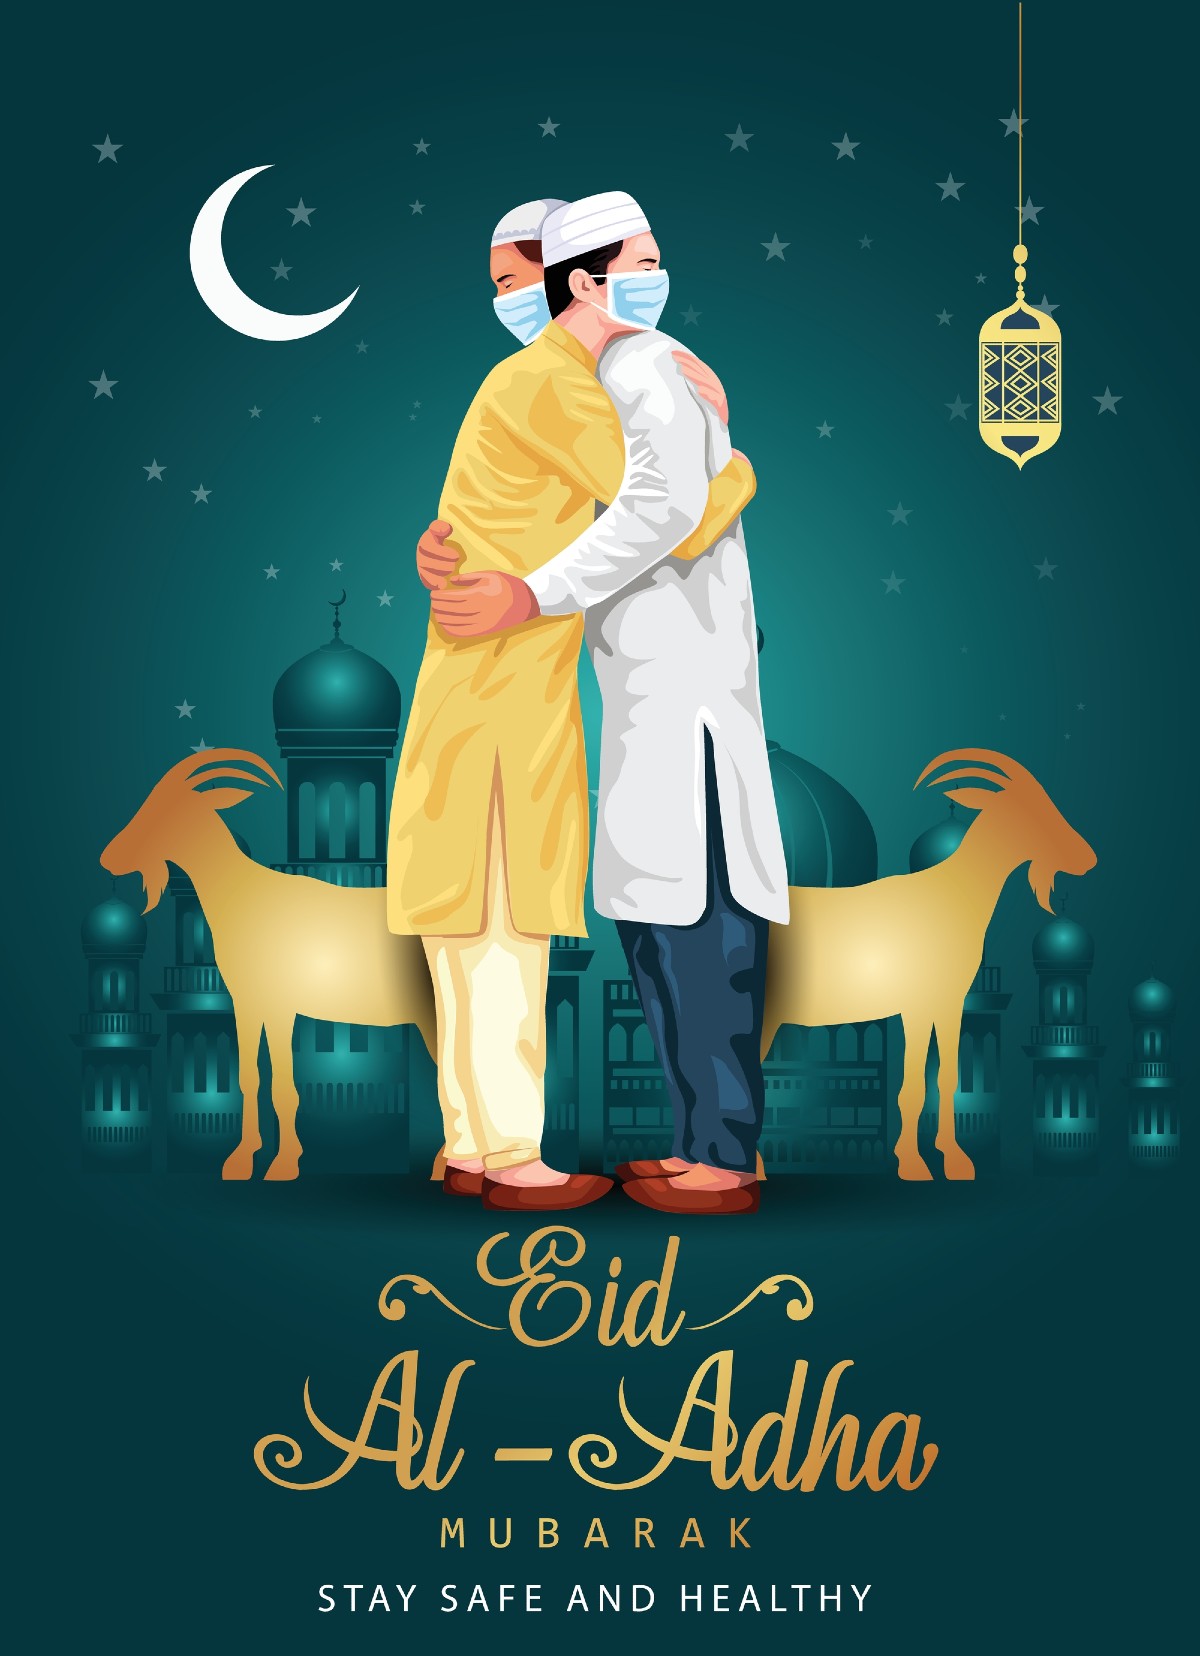 Happy EidAl Adha Wishes Images, Shayari, Quotes, Status, Photos, SMS